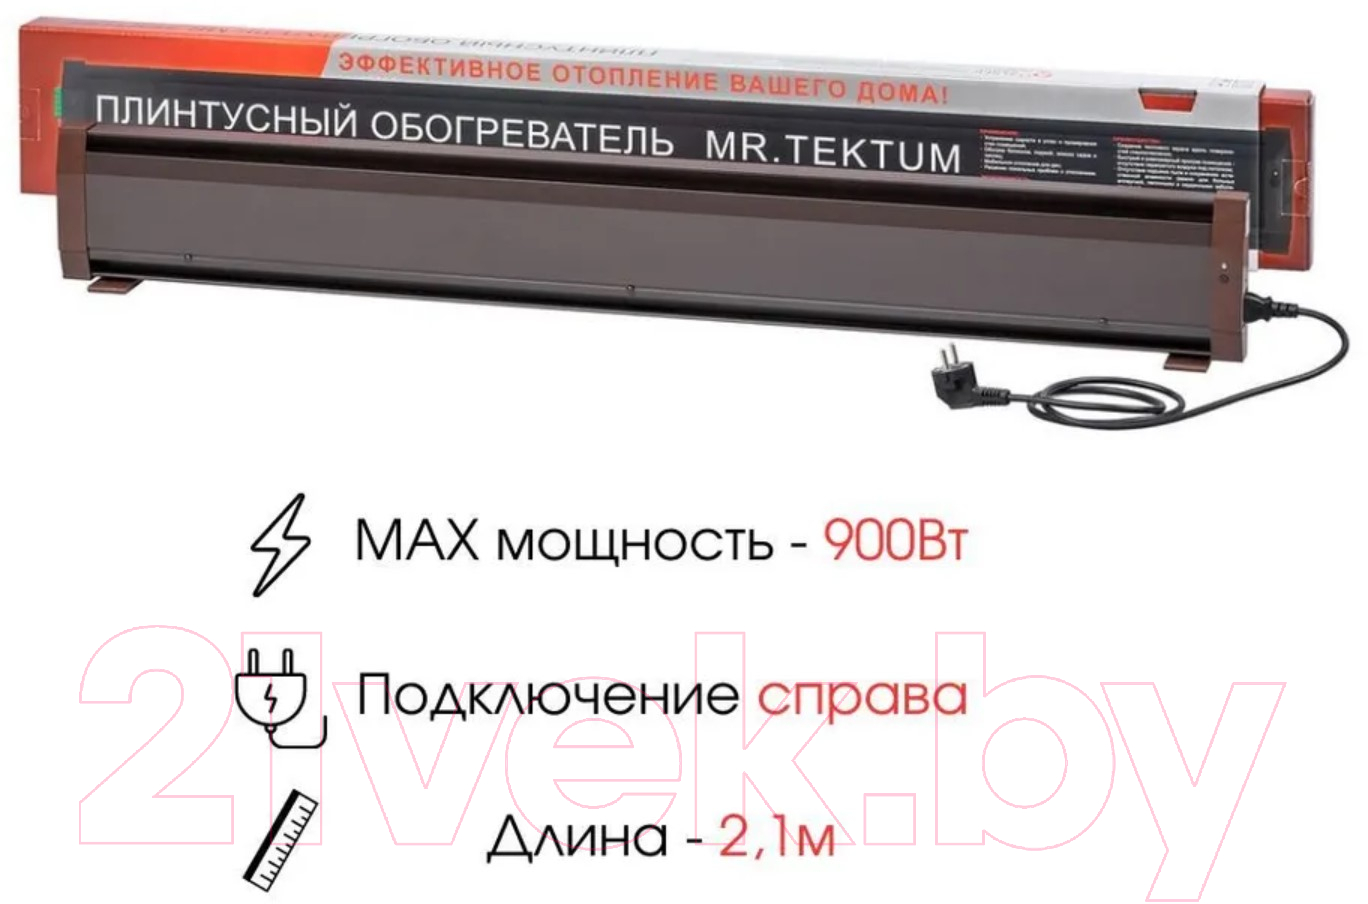 Теплый плинтус электрический Mr.Tektum Smart Line 2.1м правый